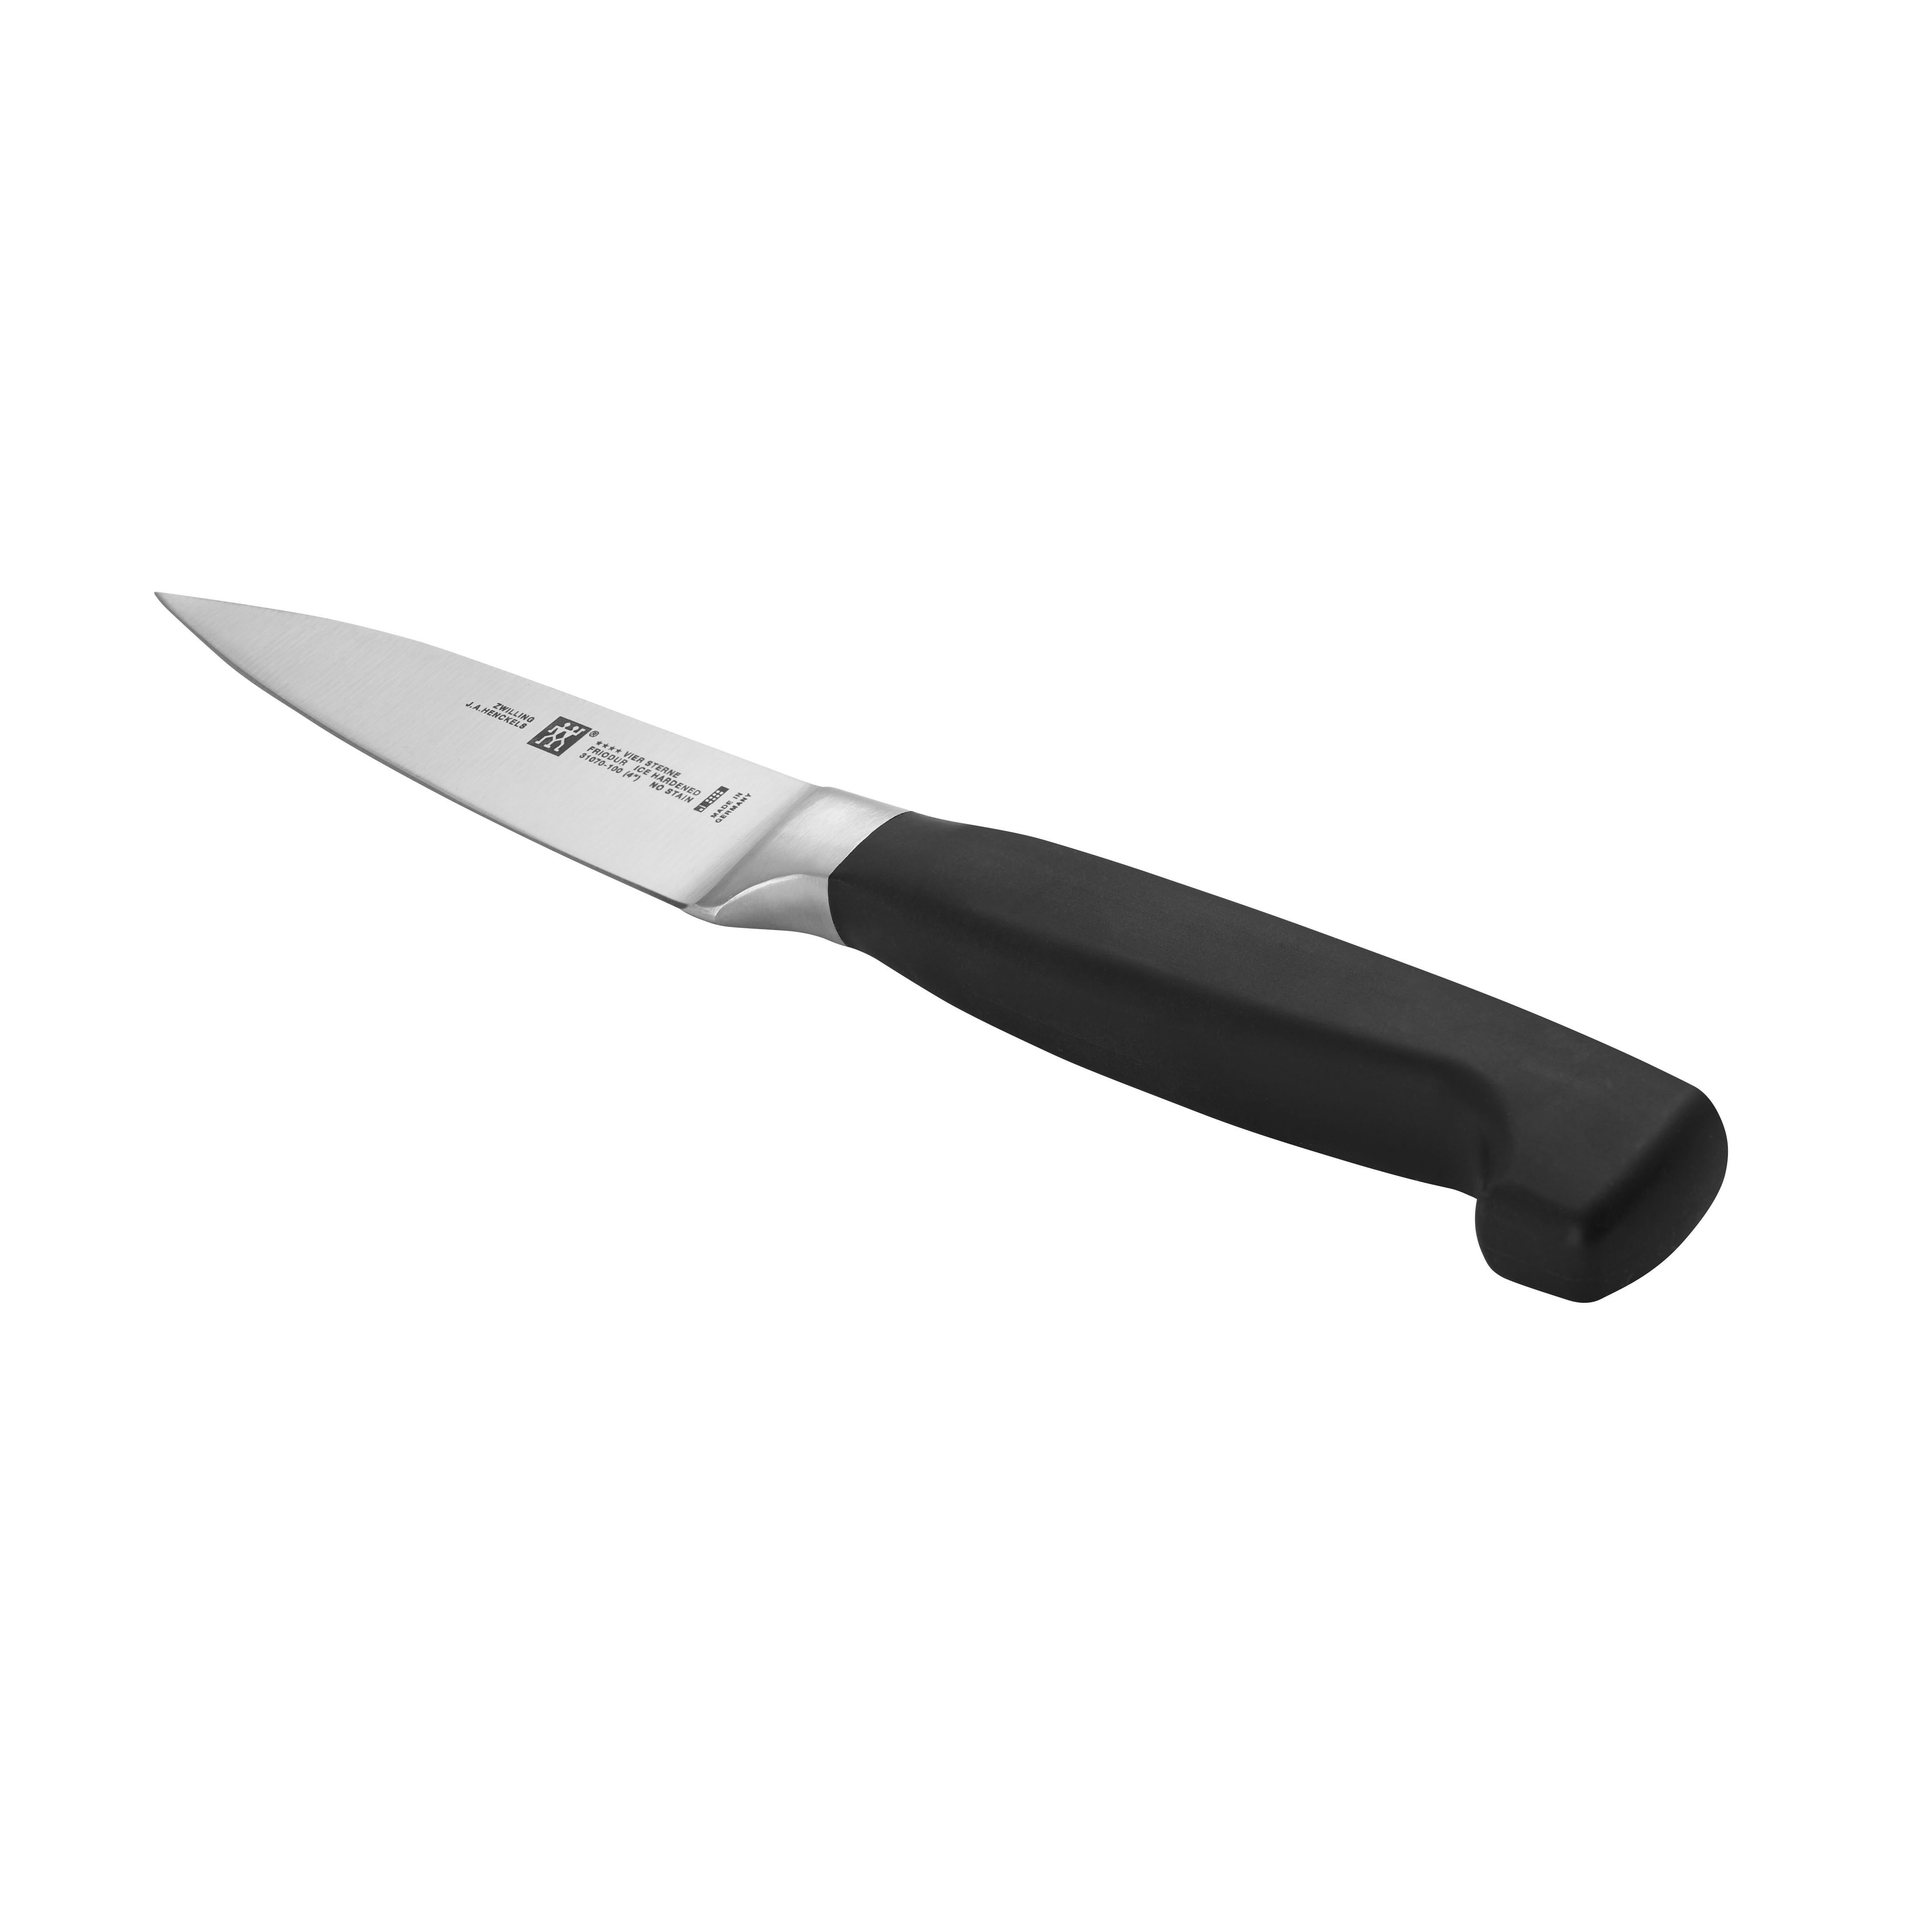 Henckels Modernist 4-inch Paring Knife & Reviews